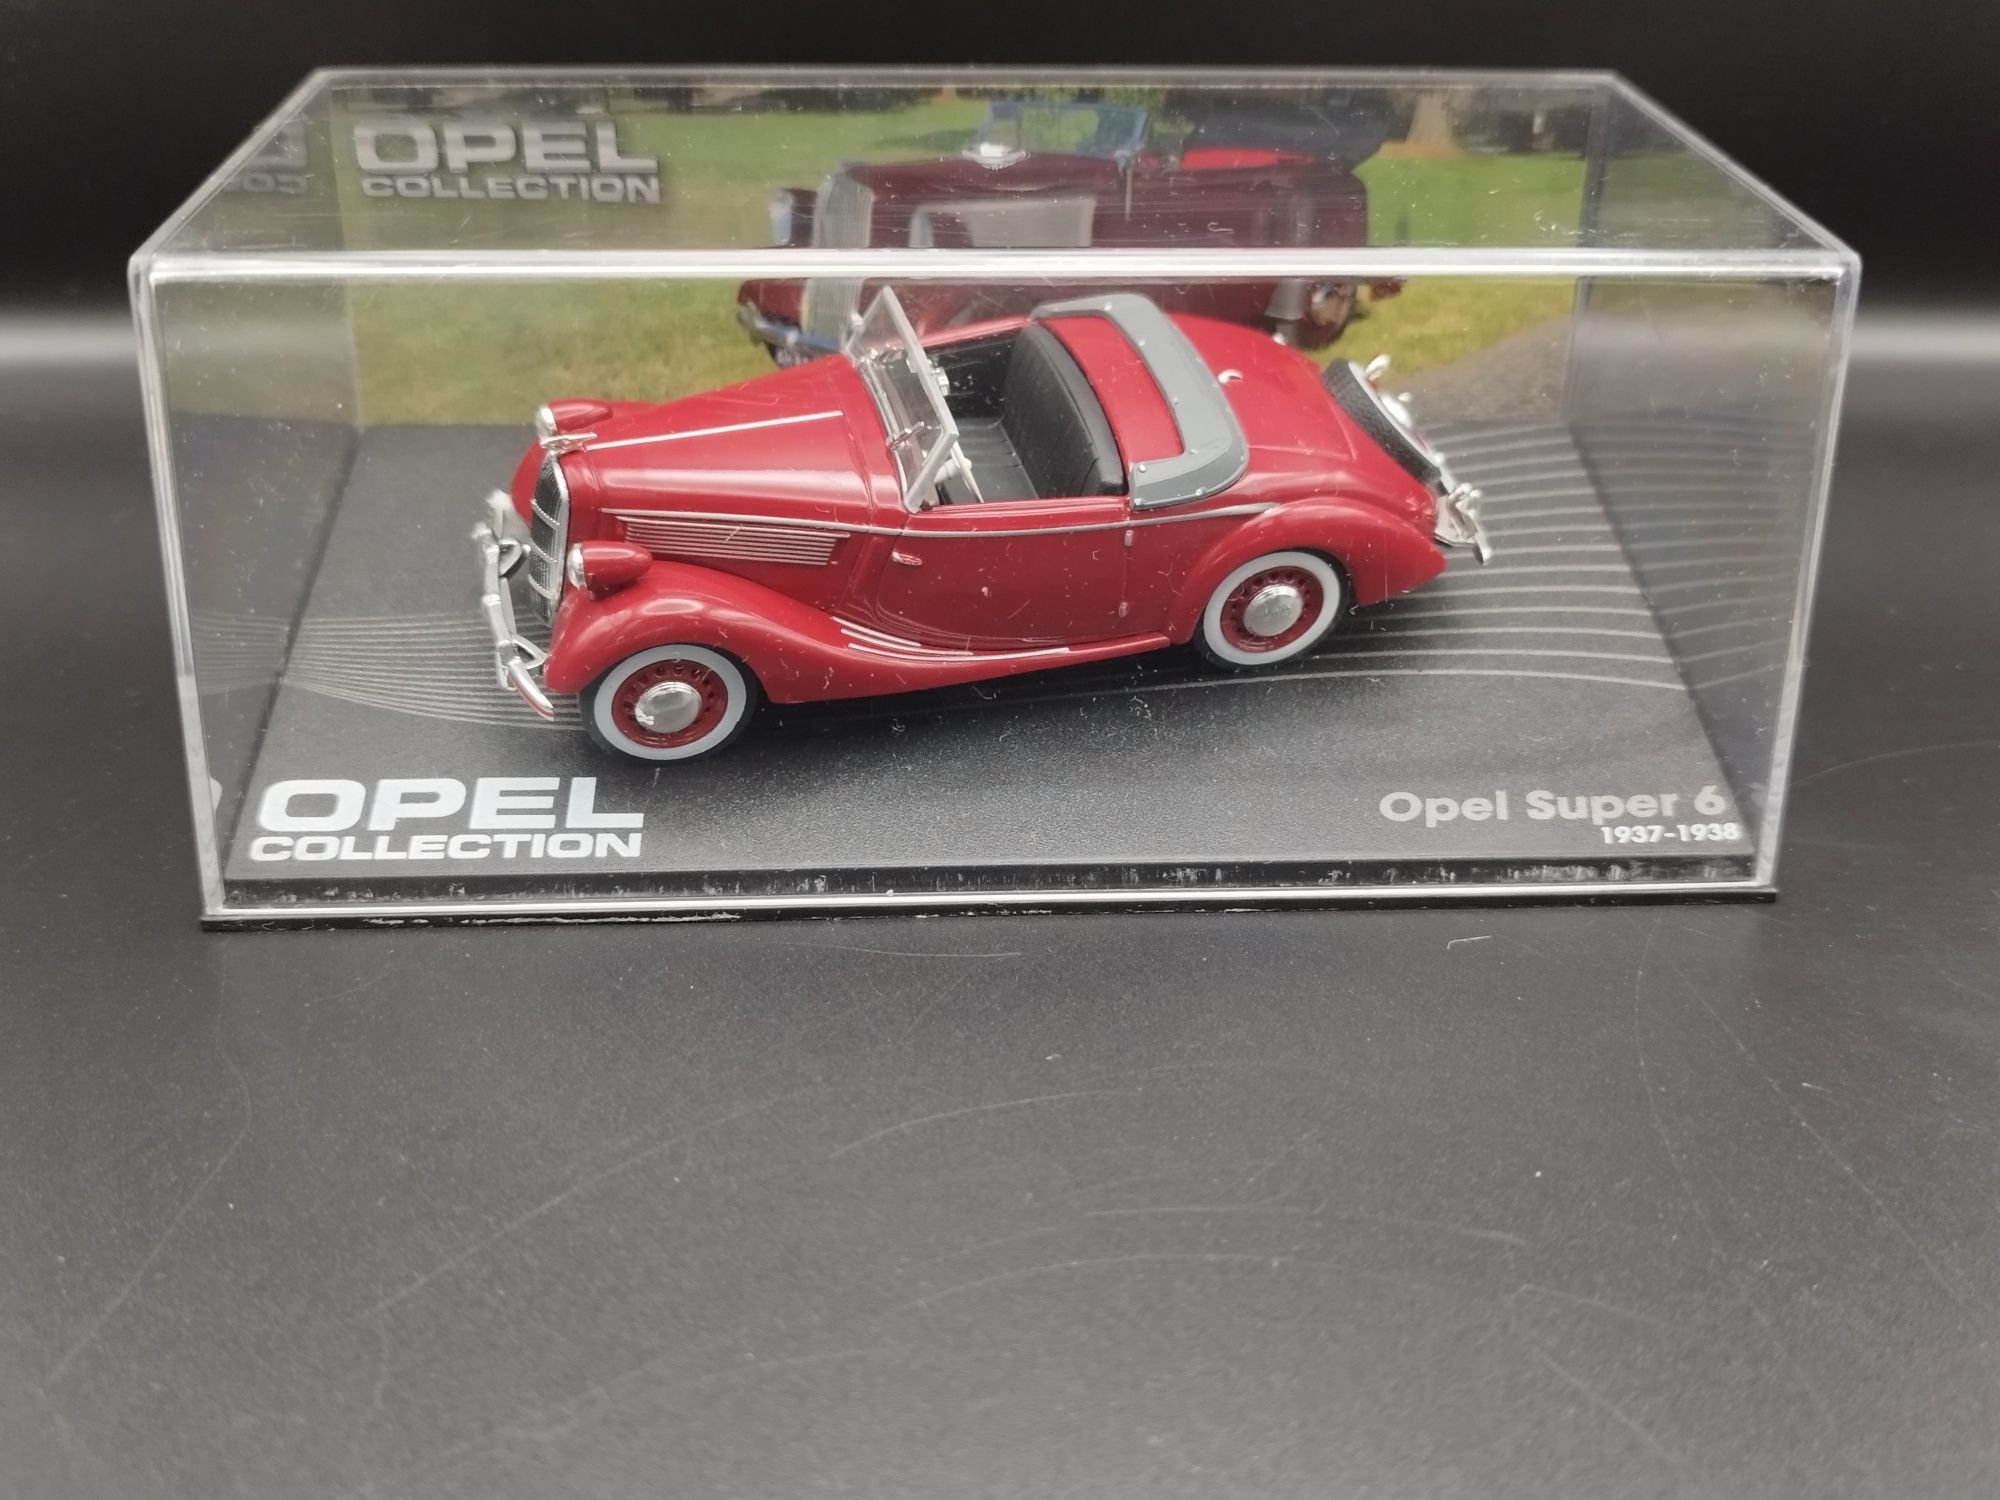 1:43 Opel Collection 1937-38 Opel Super 6  model używany